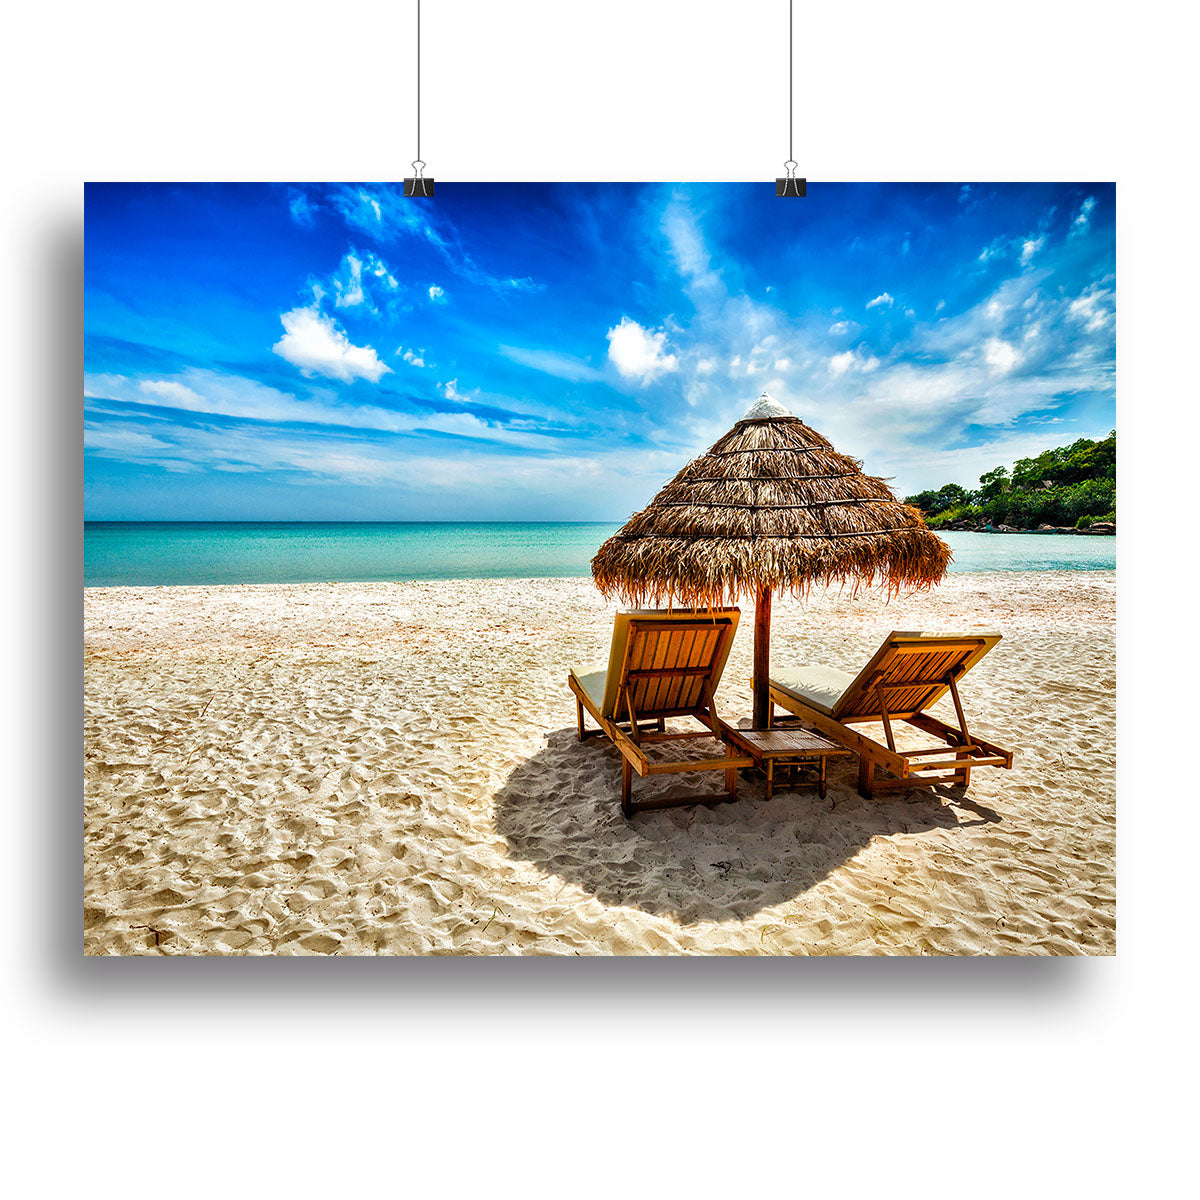 Vacation holidays Canvas Print or Poster - Canvas Art Rocks - 2